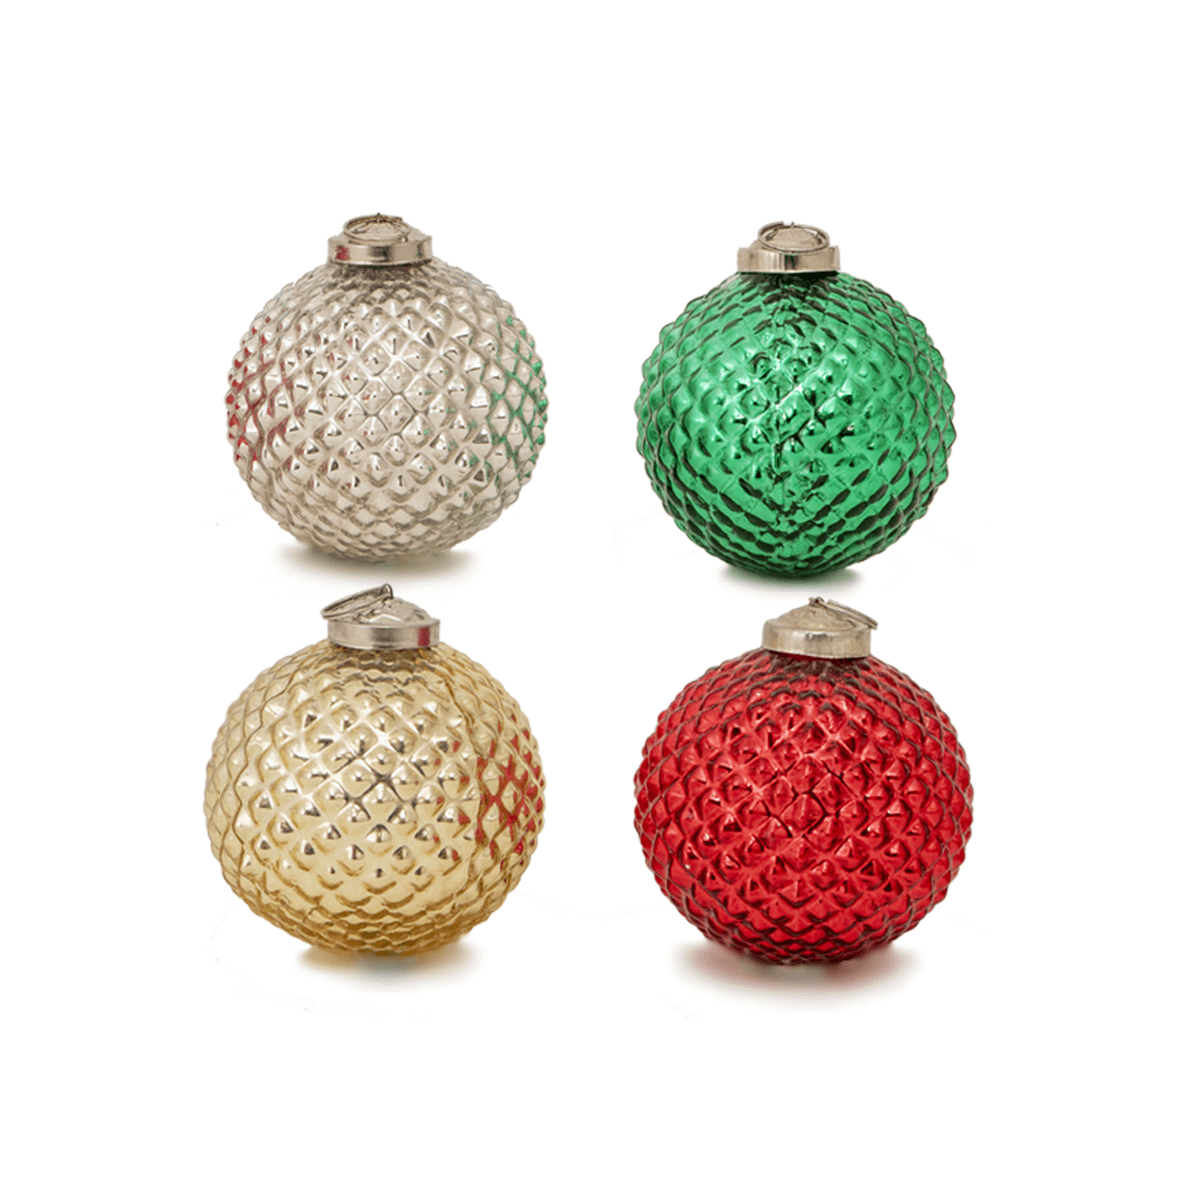 Gloria Small Christmas Ornaments Set of 4 - Home4u